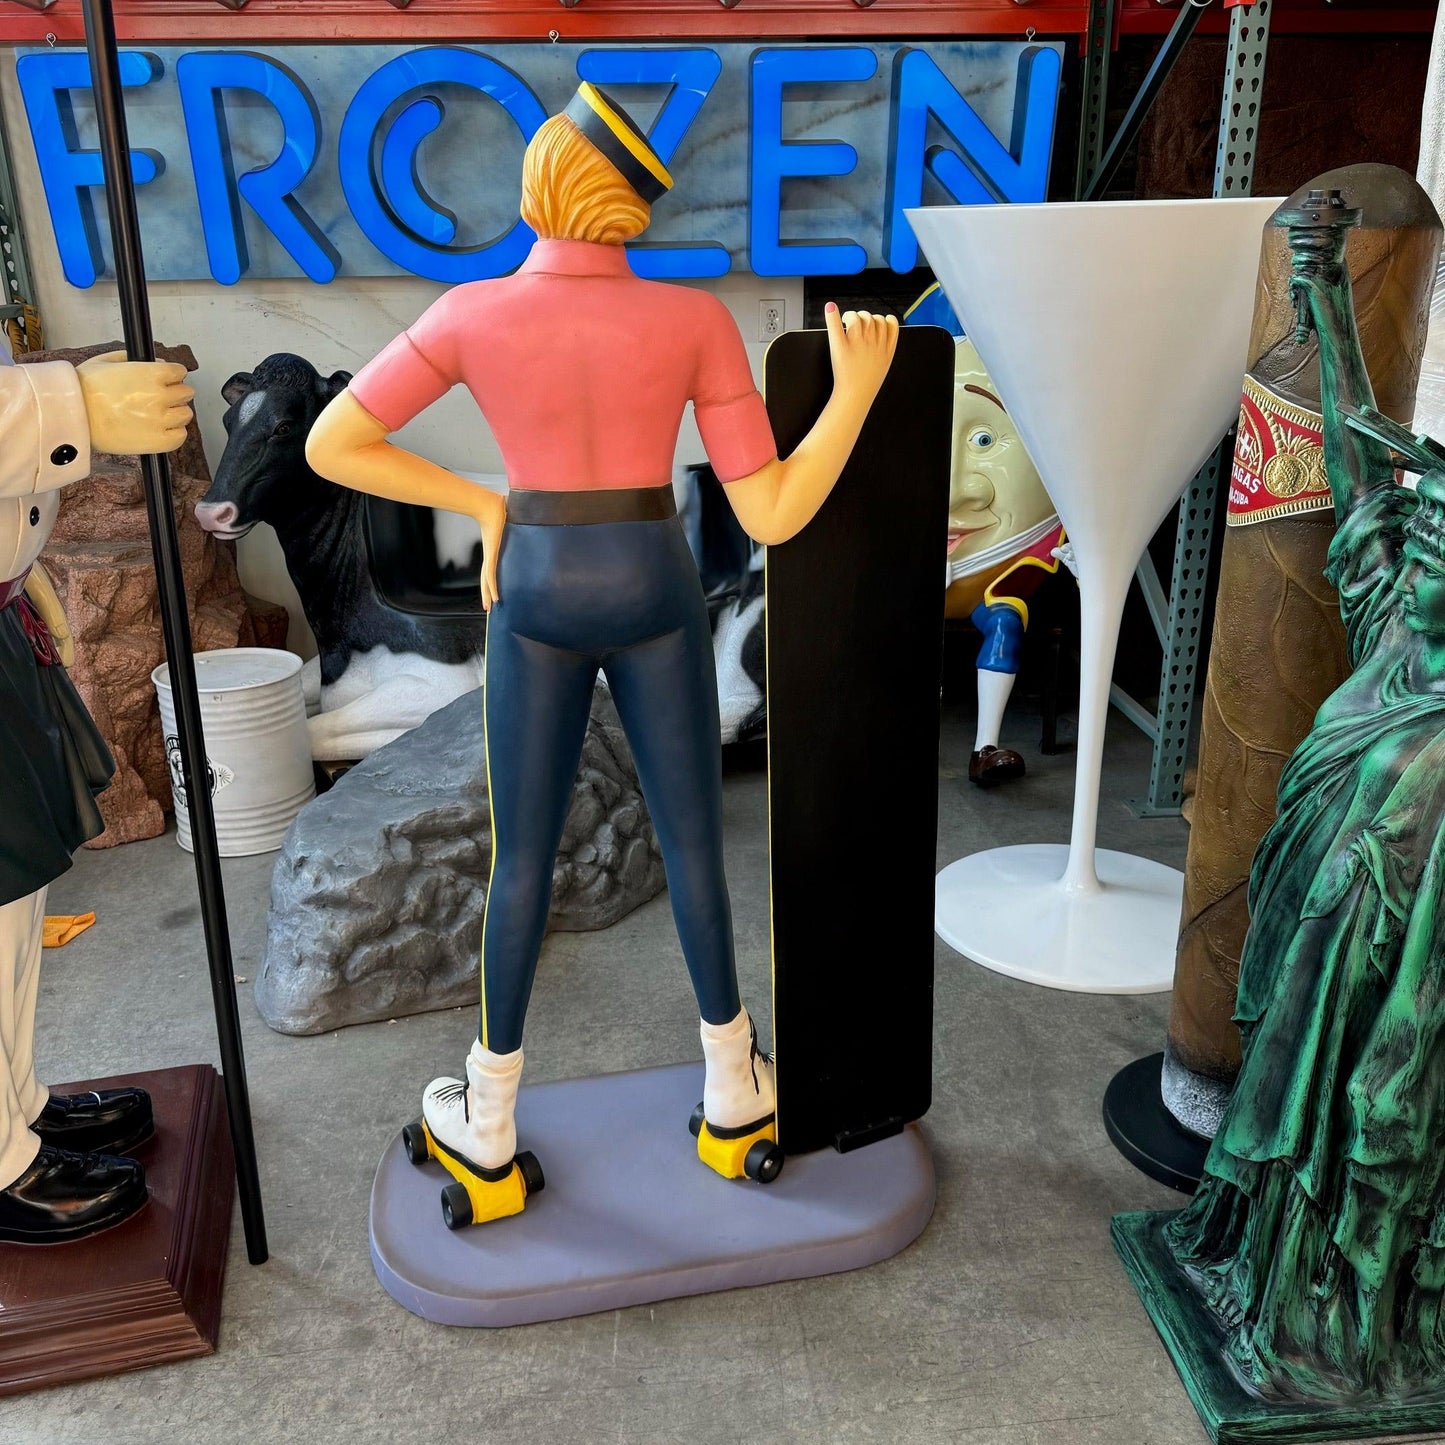 Car Hop Roller Skater Waitress With Menu Life Size Statue - LM Treasures Prop Rentals 